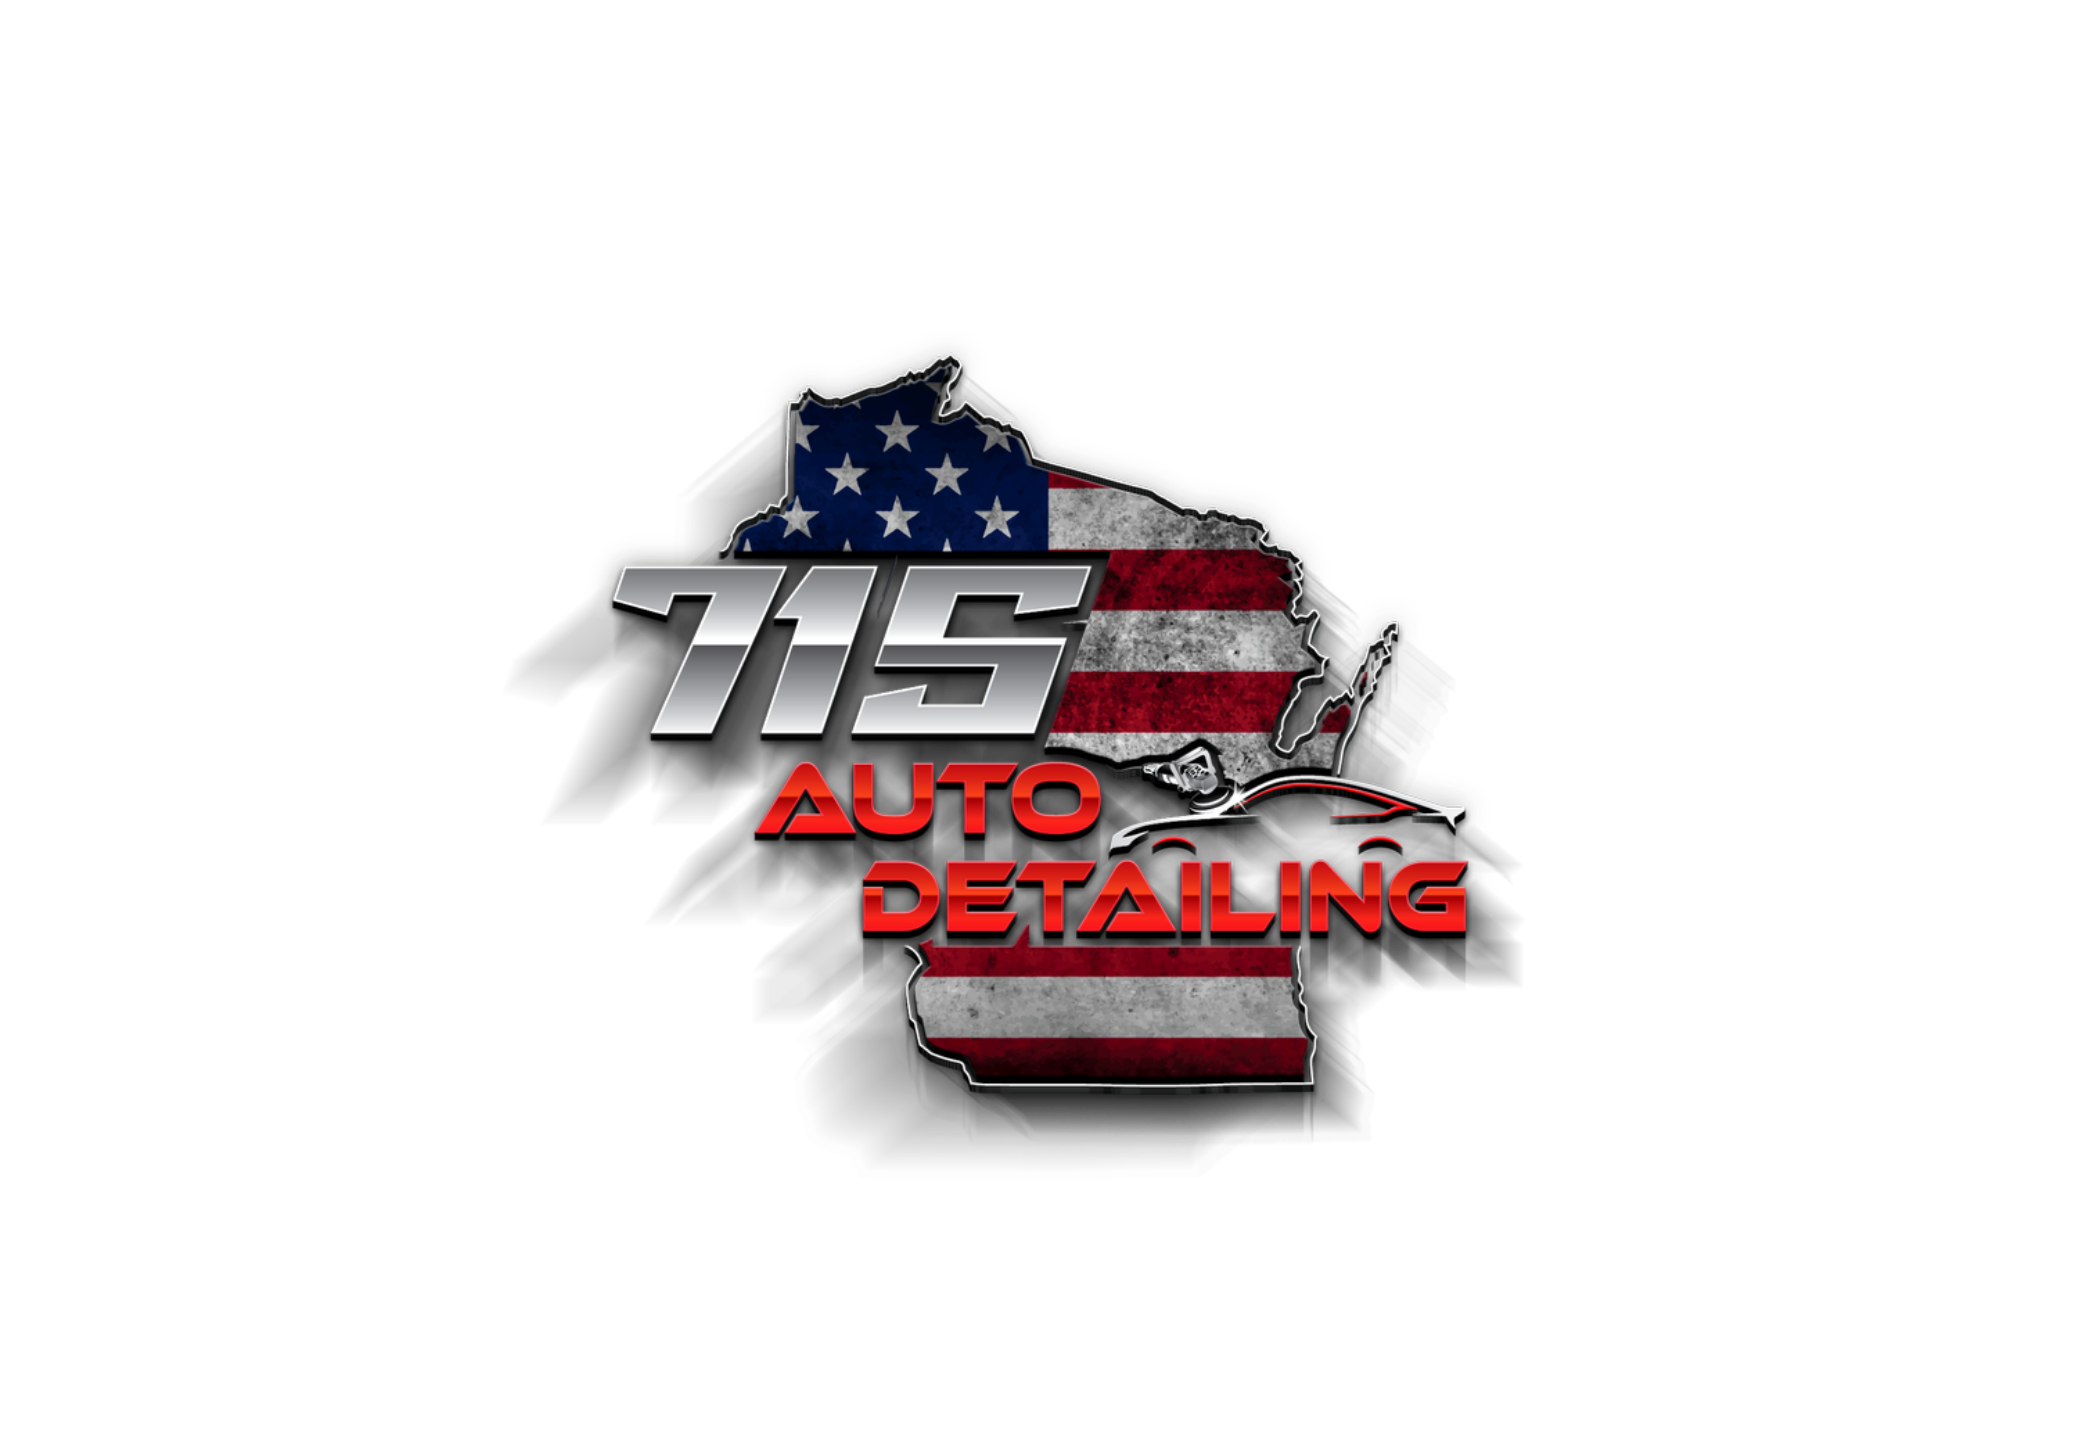 715 Auto Detailing Logo